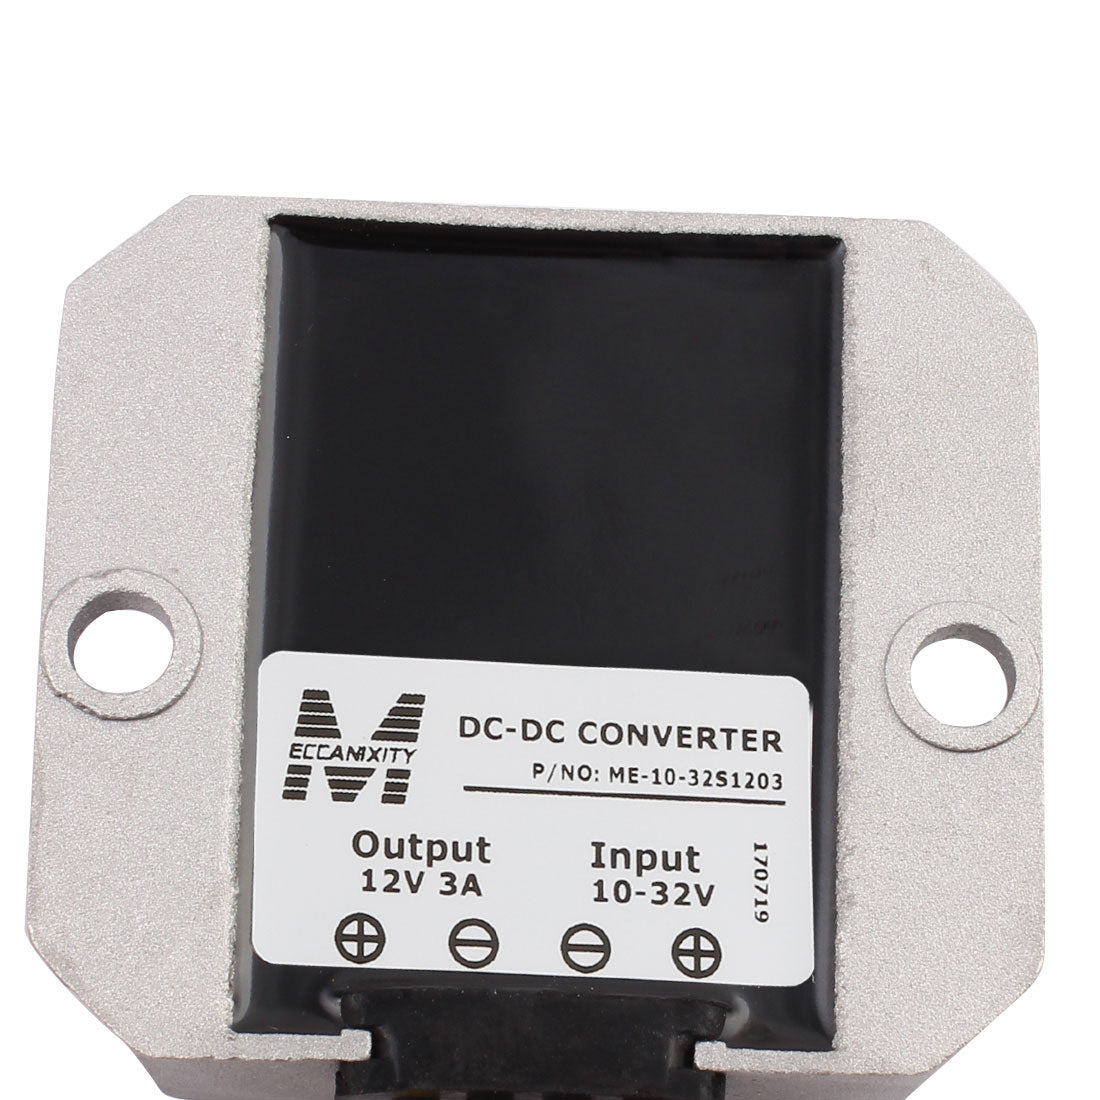 uxcell Uxcell Voltage Converter Regulator DC/DC DC 10-32V to DC 12V 3A 36W /Up Transformer Waterproof